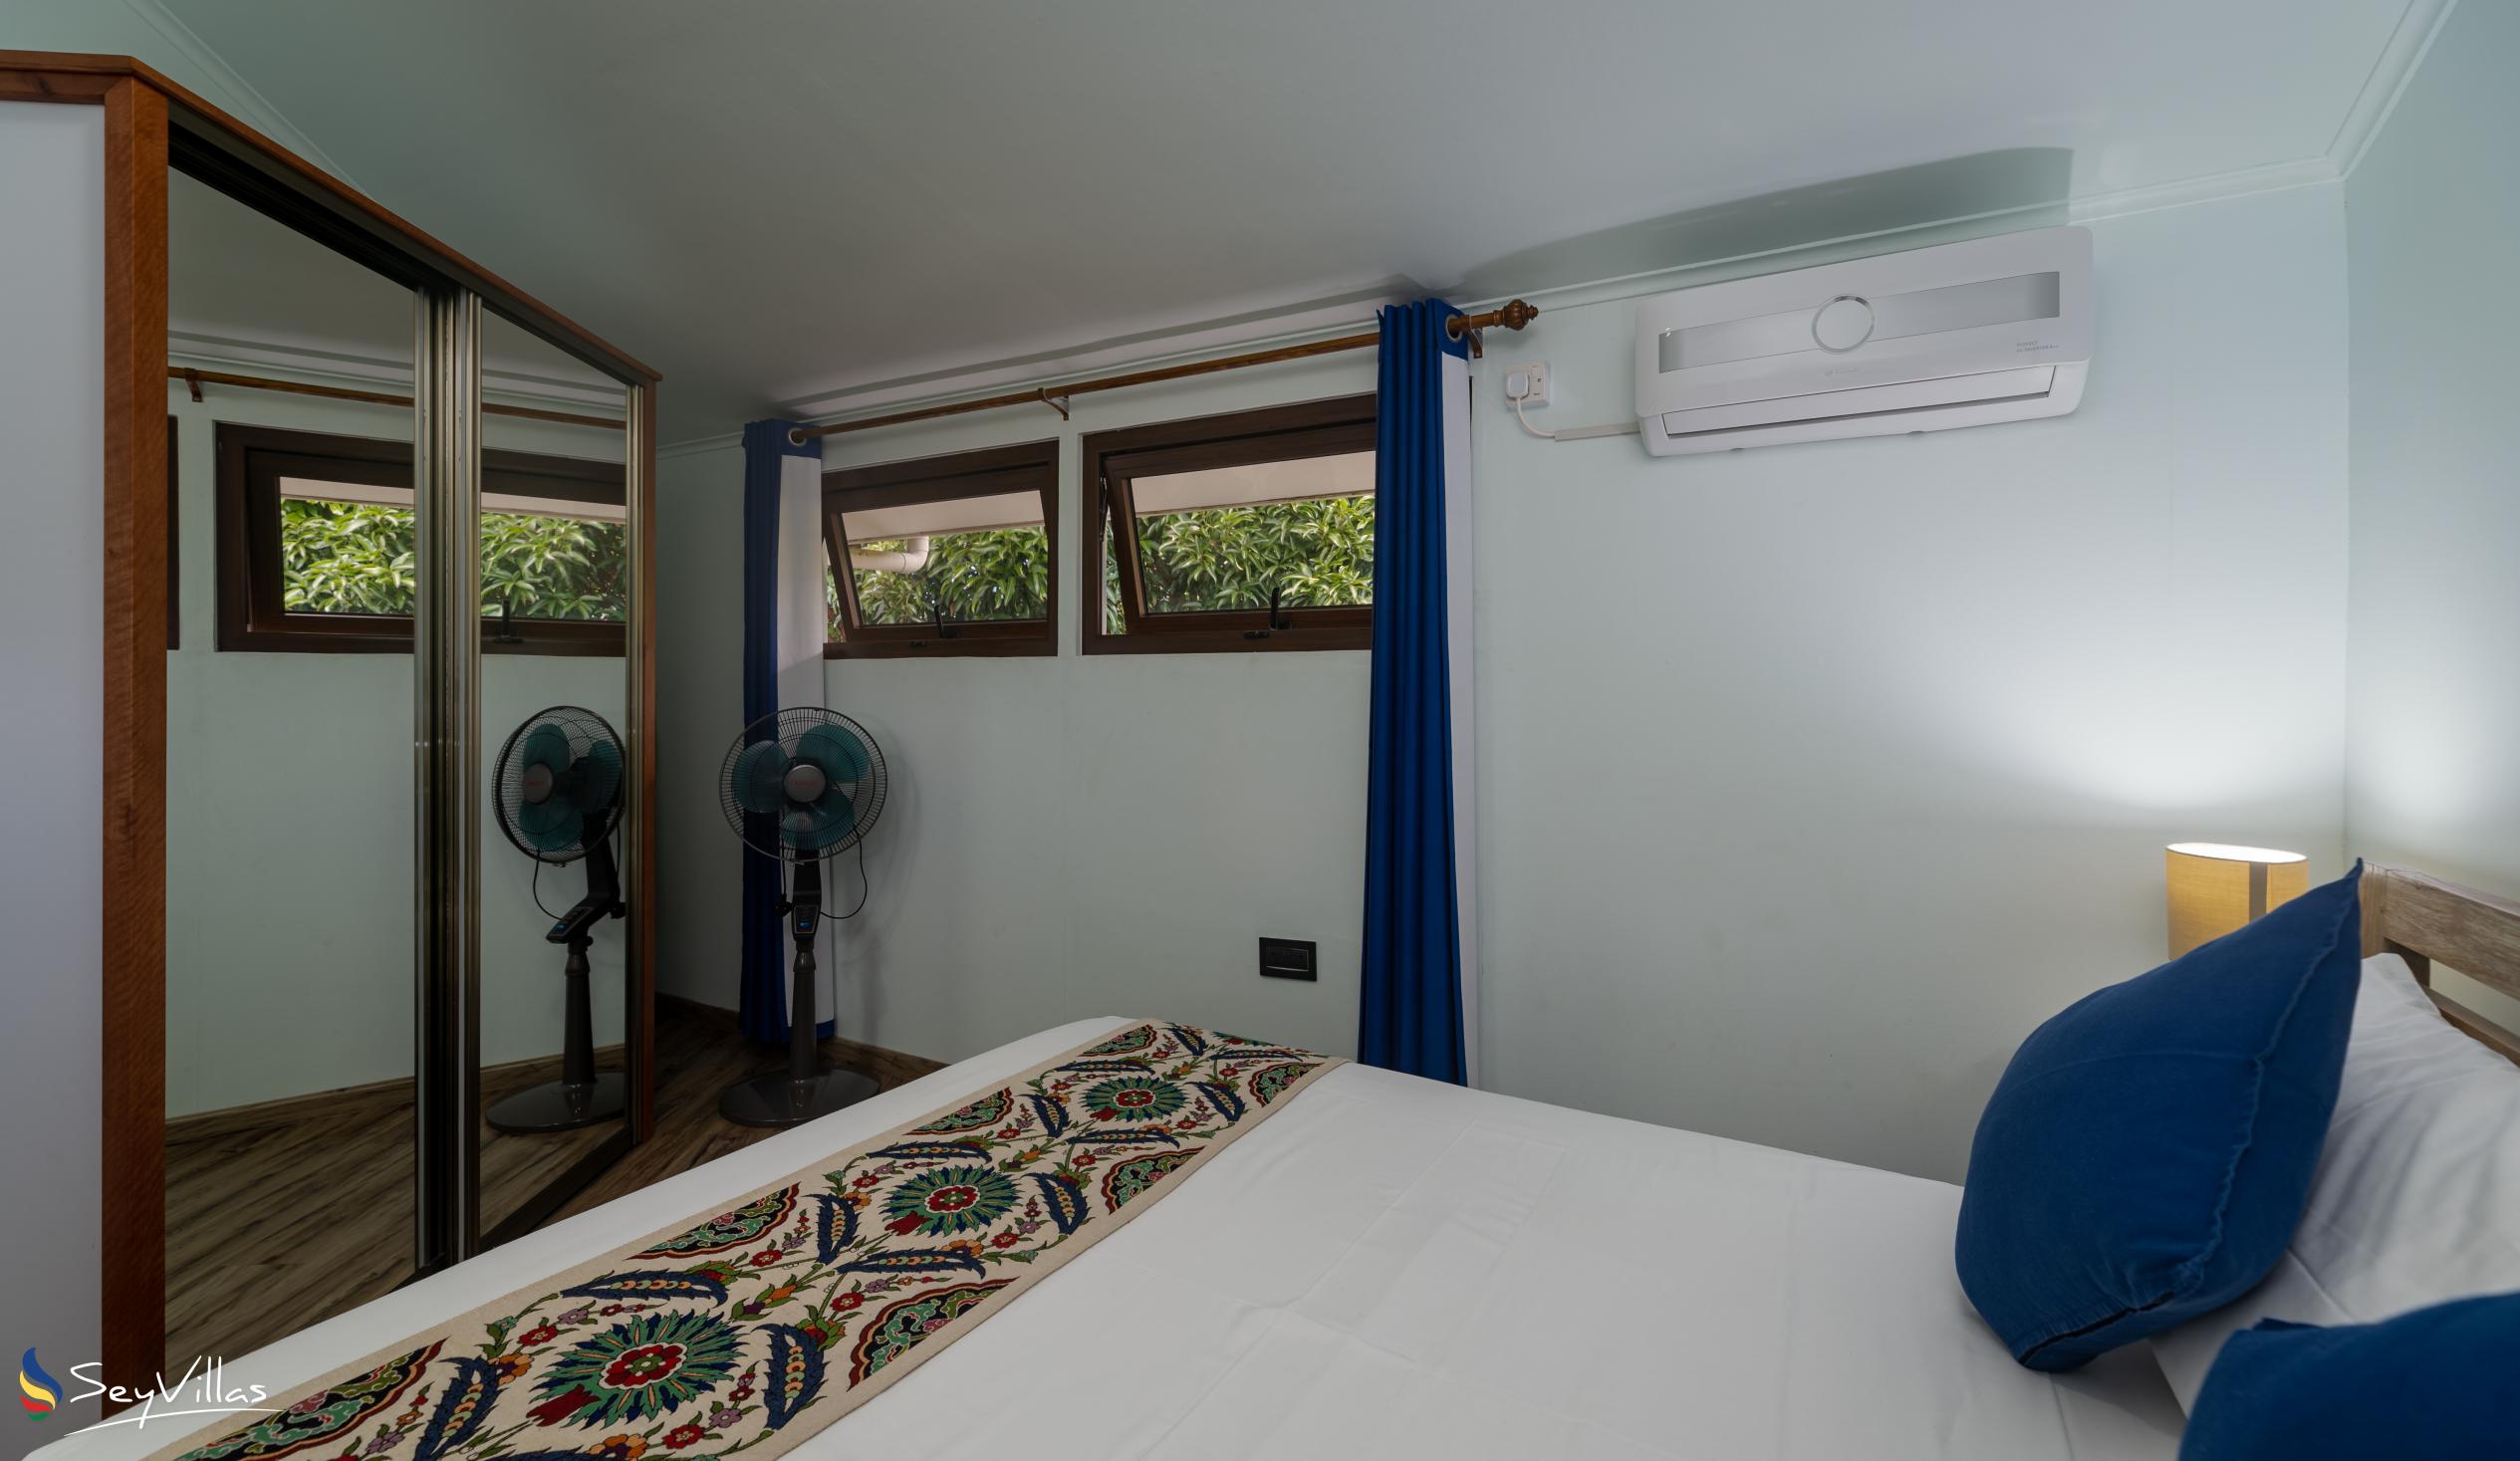 Photo 70: Cap-Sud Self Catering - 3-Bedroom Apartment - Mahé (Seychelles)